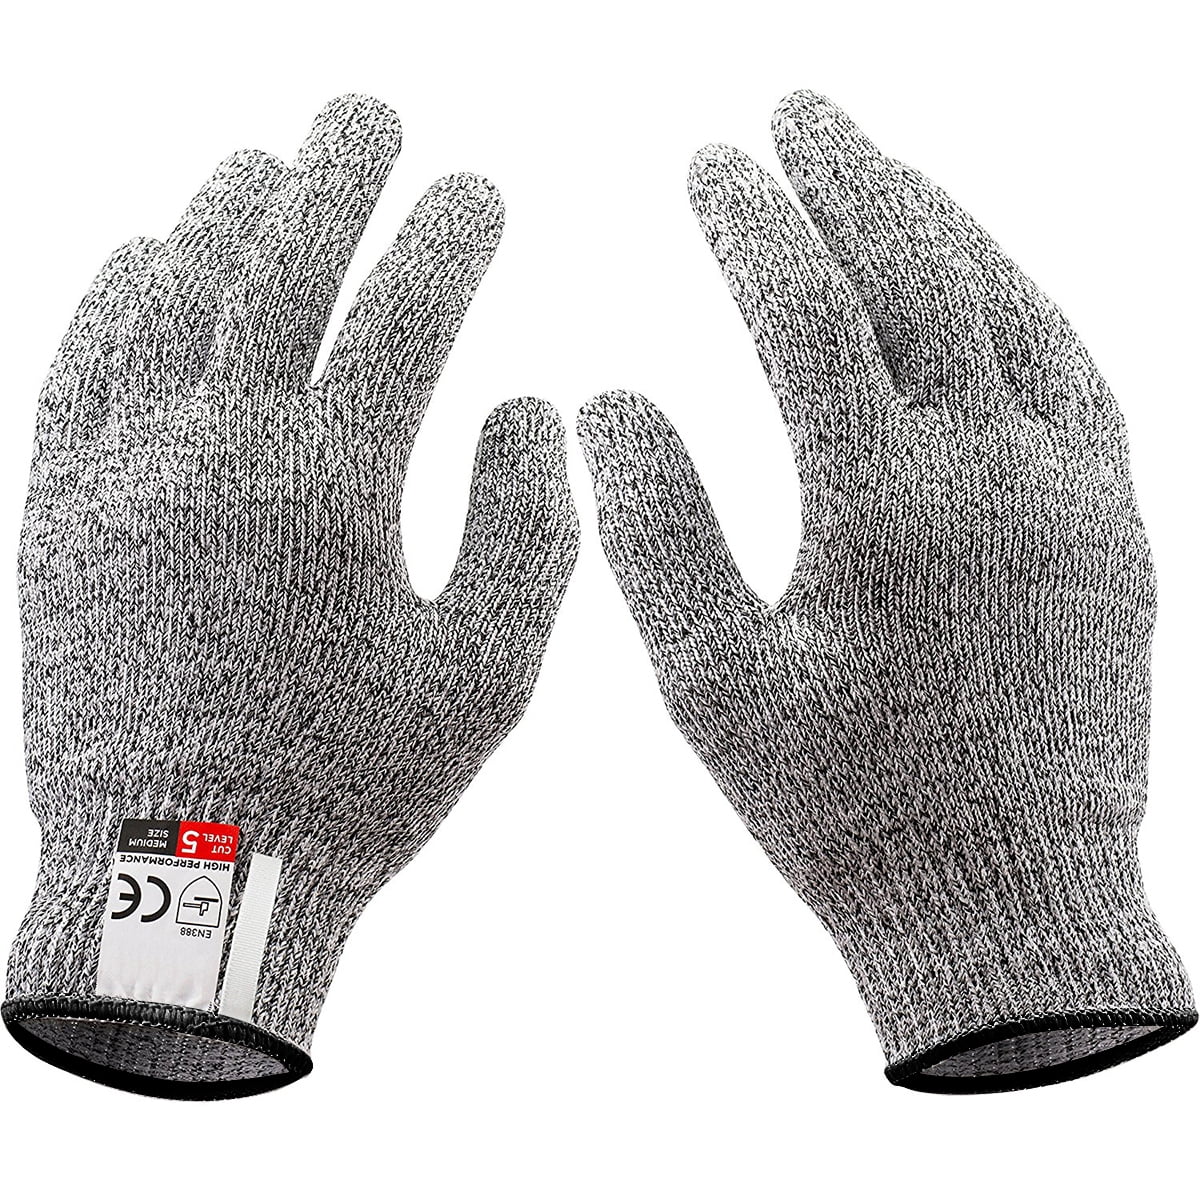 5 Protective Cut Resistant Gloves Safety Handwork Kitchen Cutting Butcher Level